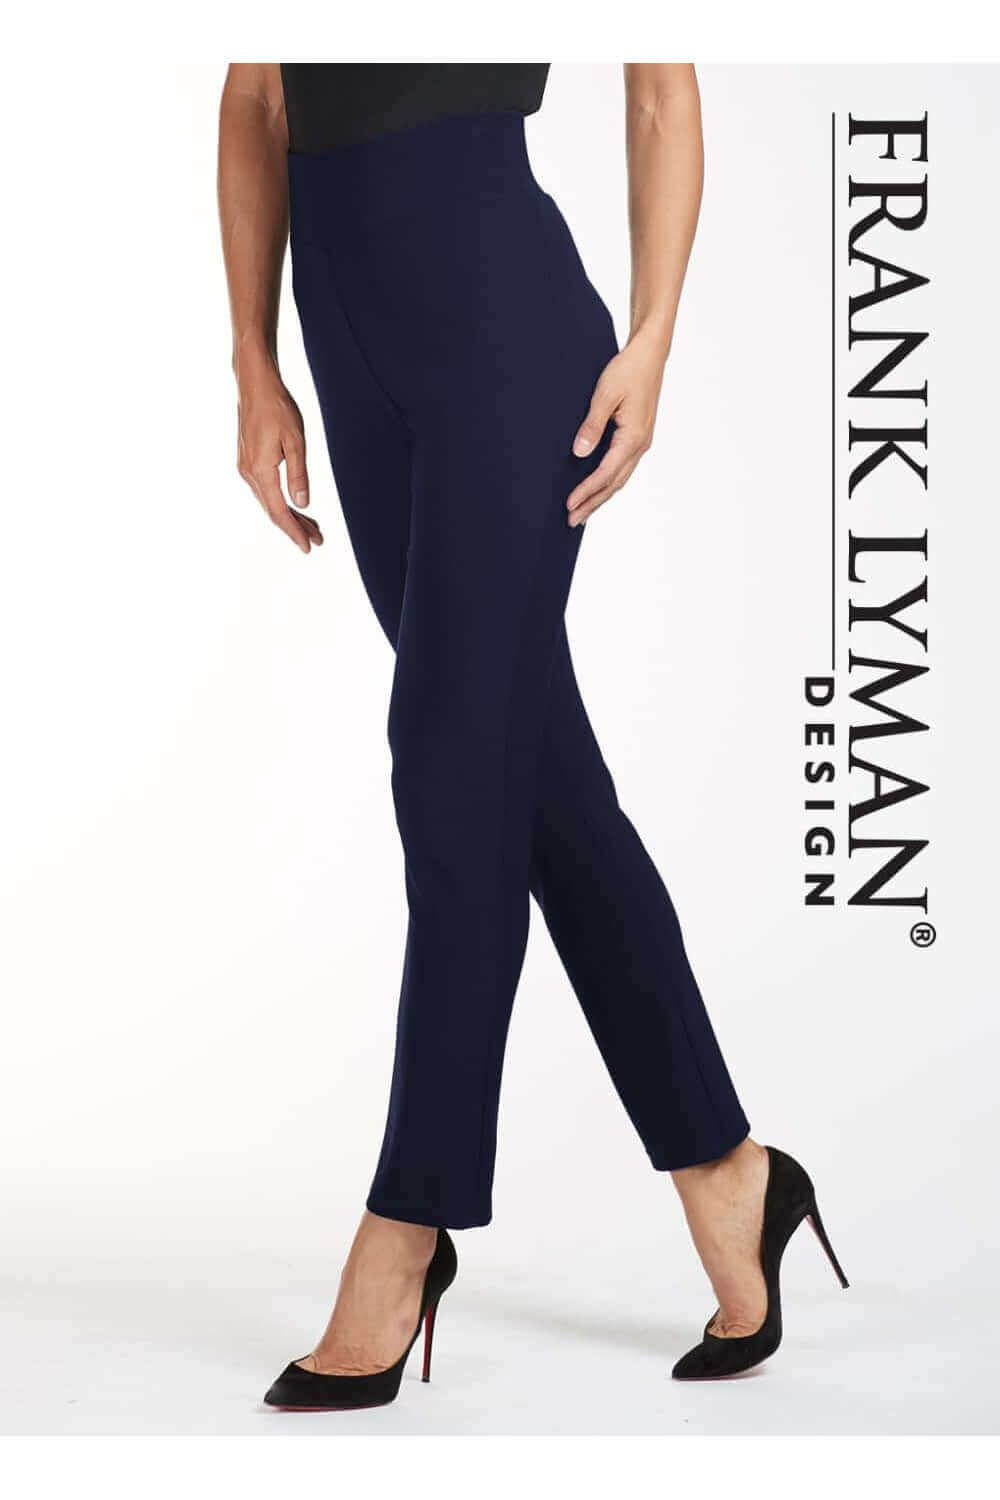 Frank Lyman Pant Style 082-DN Dark Navy Belle Mia Boutique